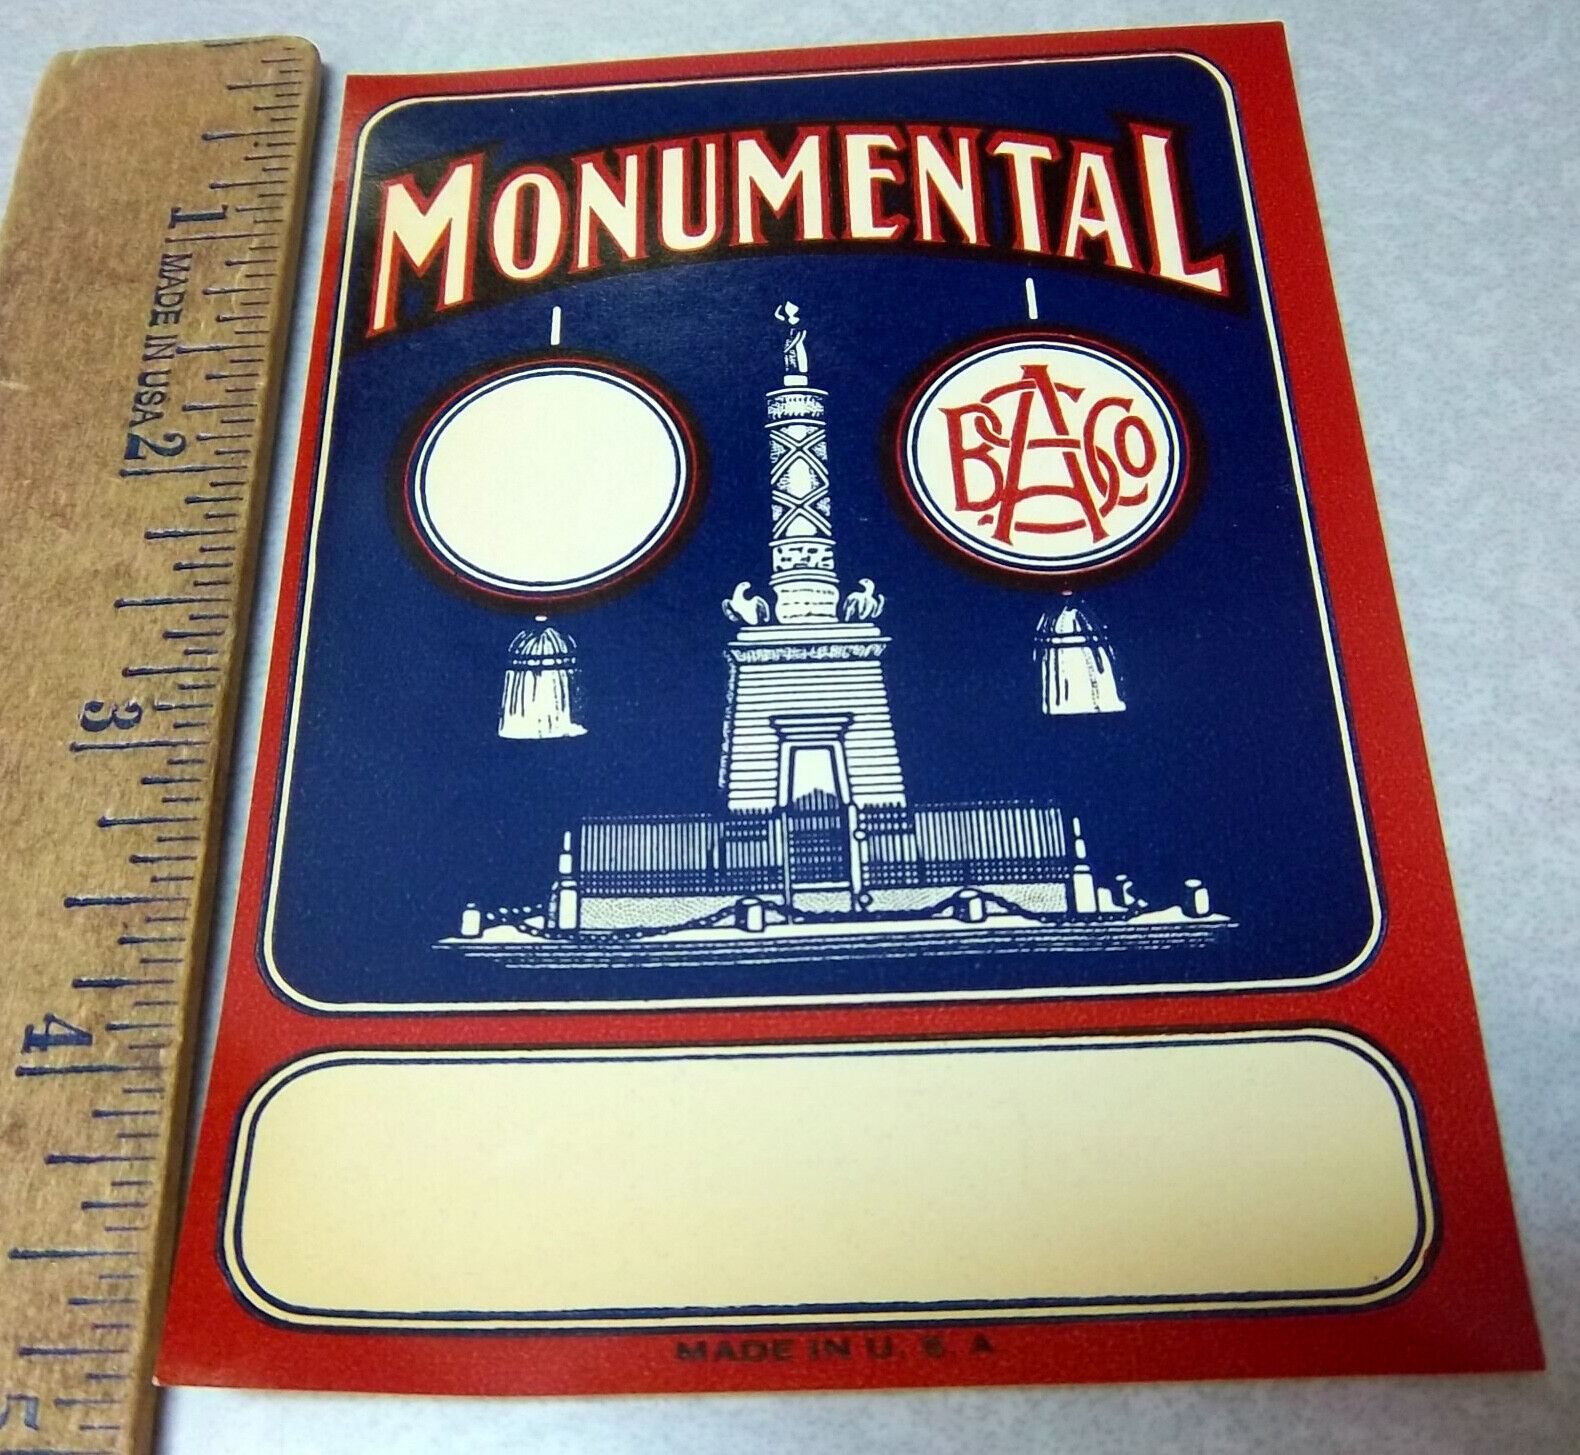 Vintage Original Label, 1930 Monumental broom label, Great graphics & Colors